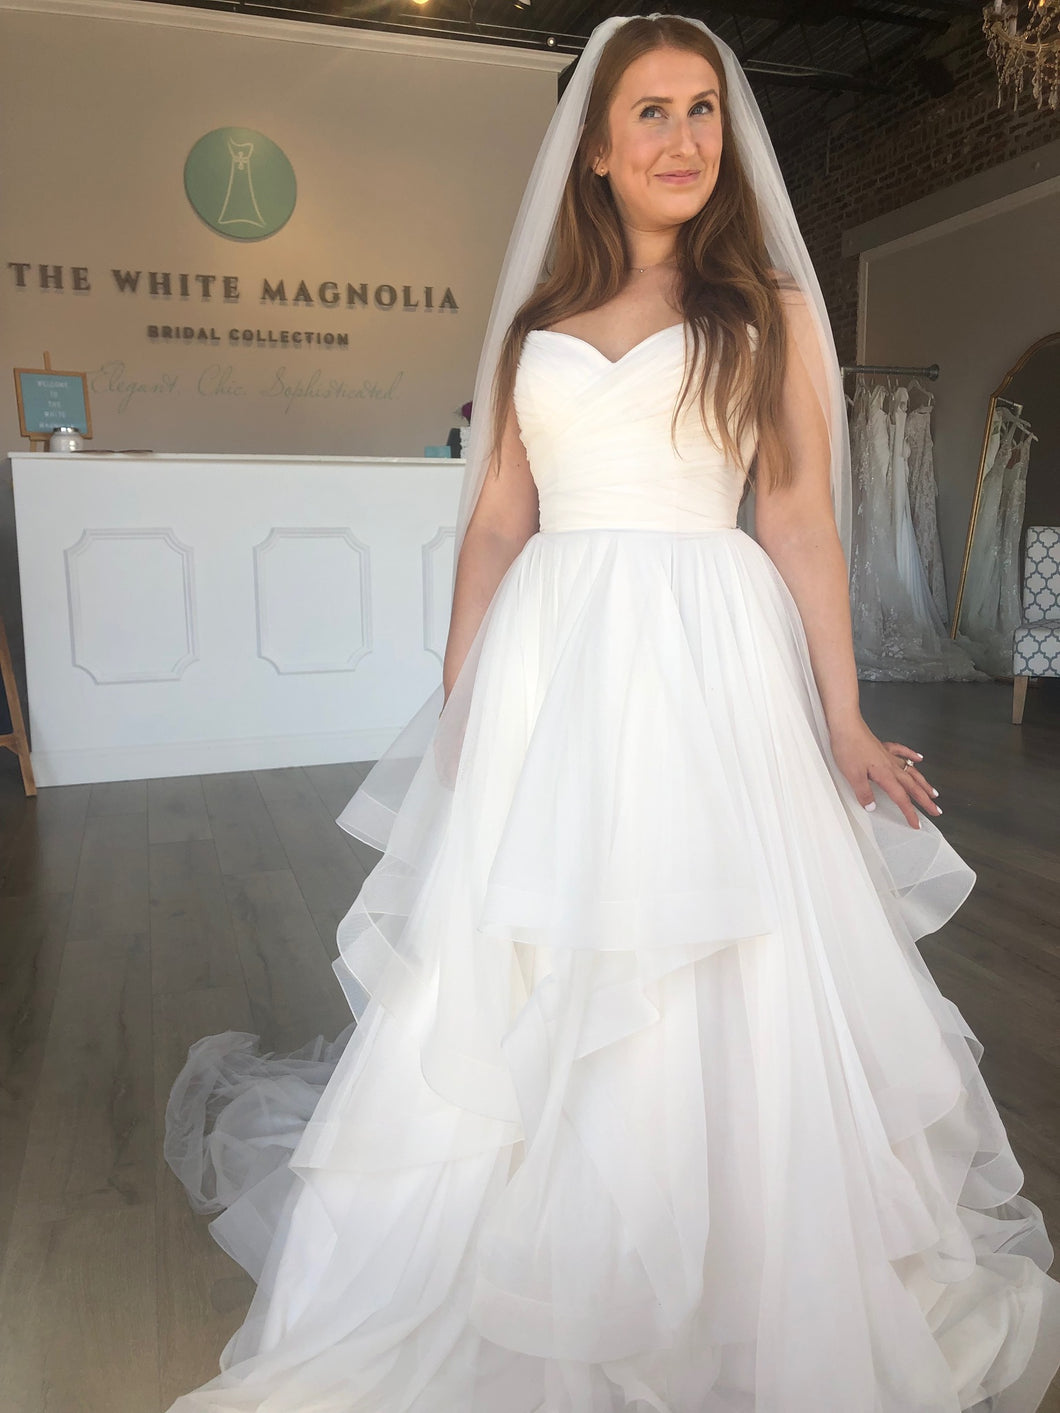 Mikaella 'Mikaella 2164' wedding dress size-08 NEW